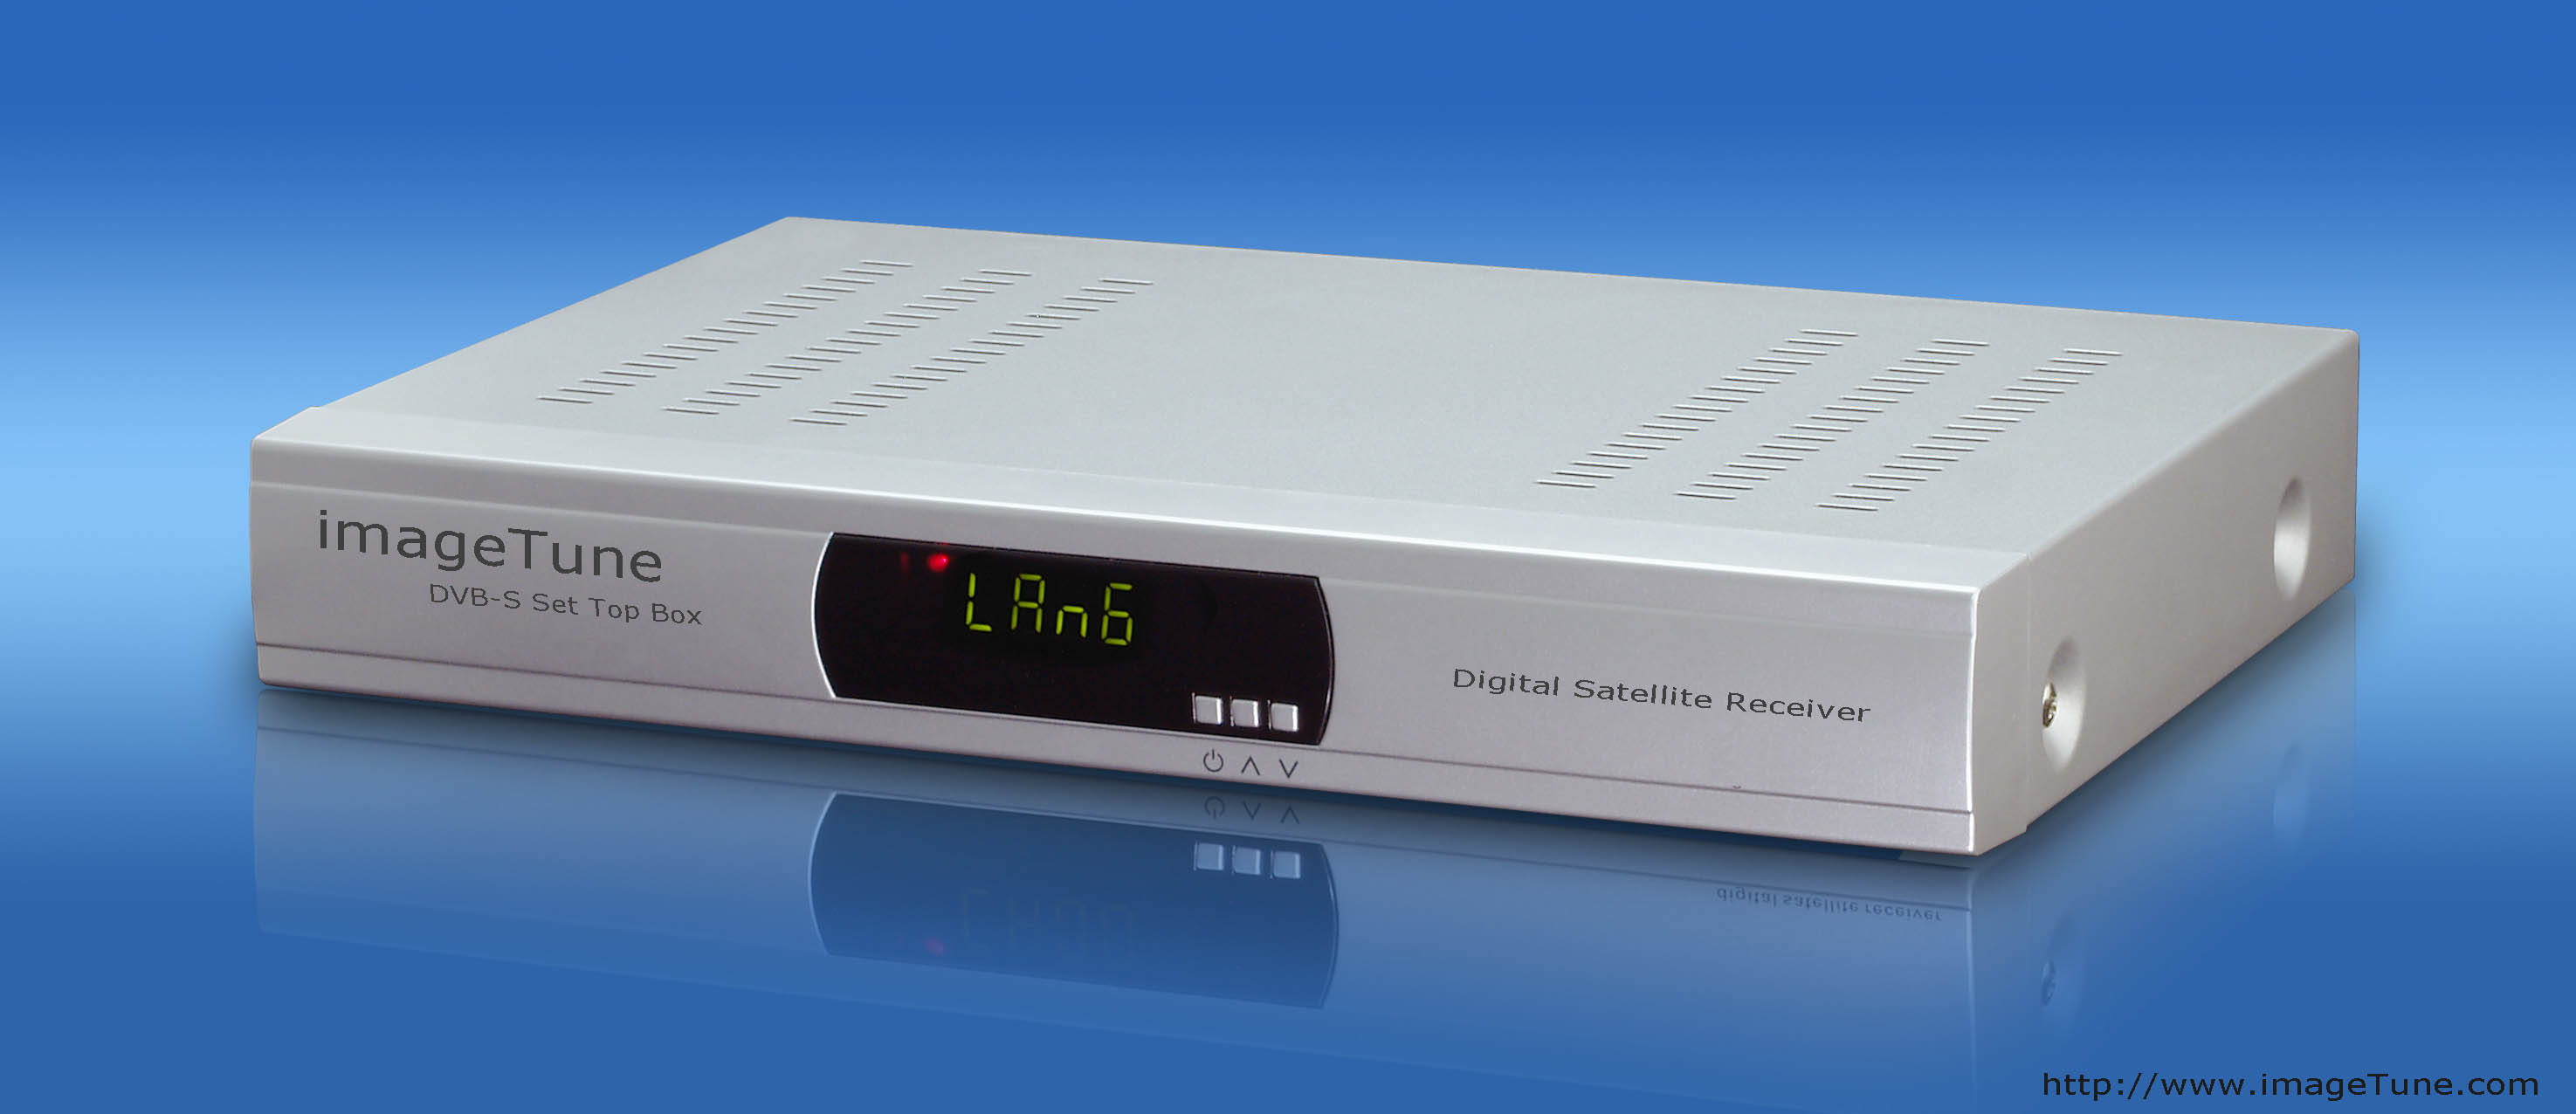 DVB-S Set Top Box to watch Satellite TV